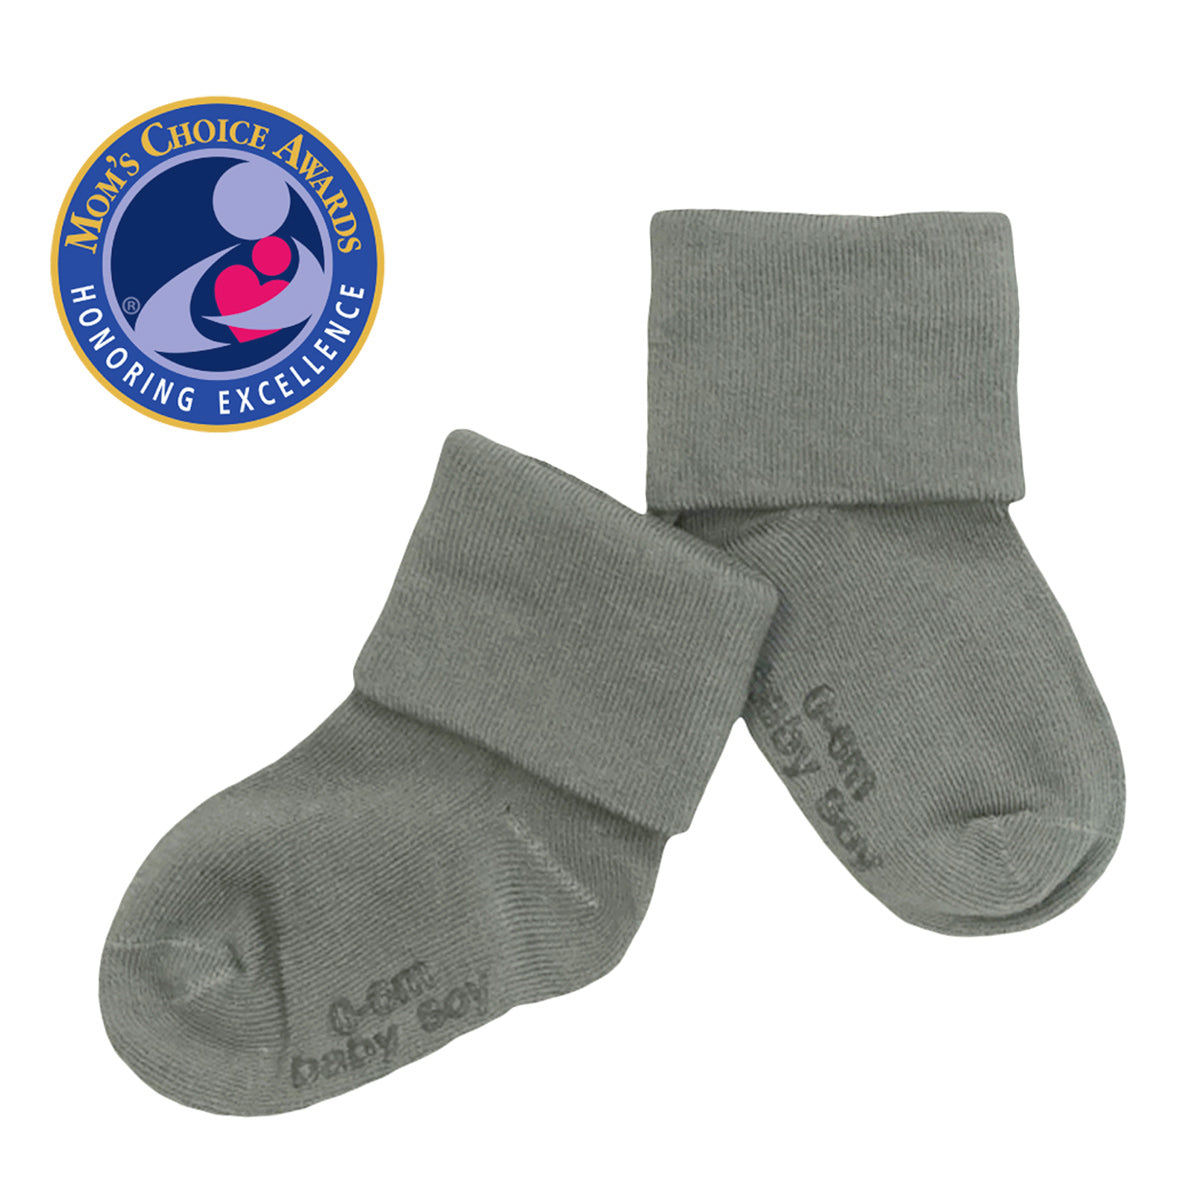 40% off- Frugi Baby/Toddler Grippy Socks - 2 Pack - Fjord Green